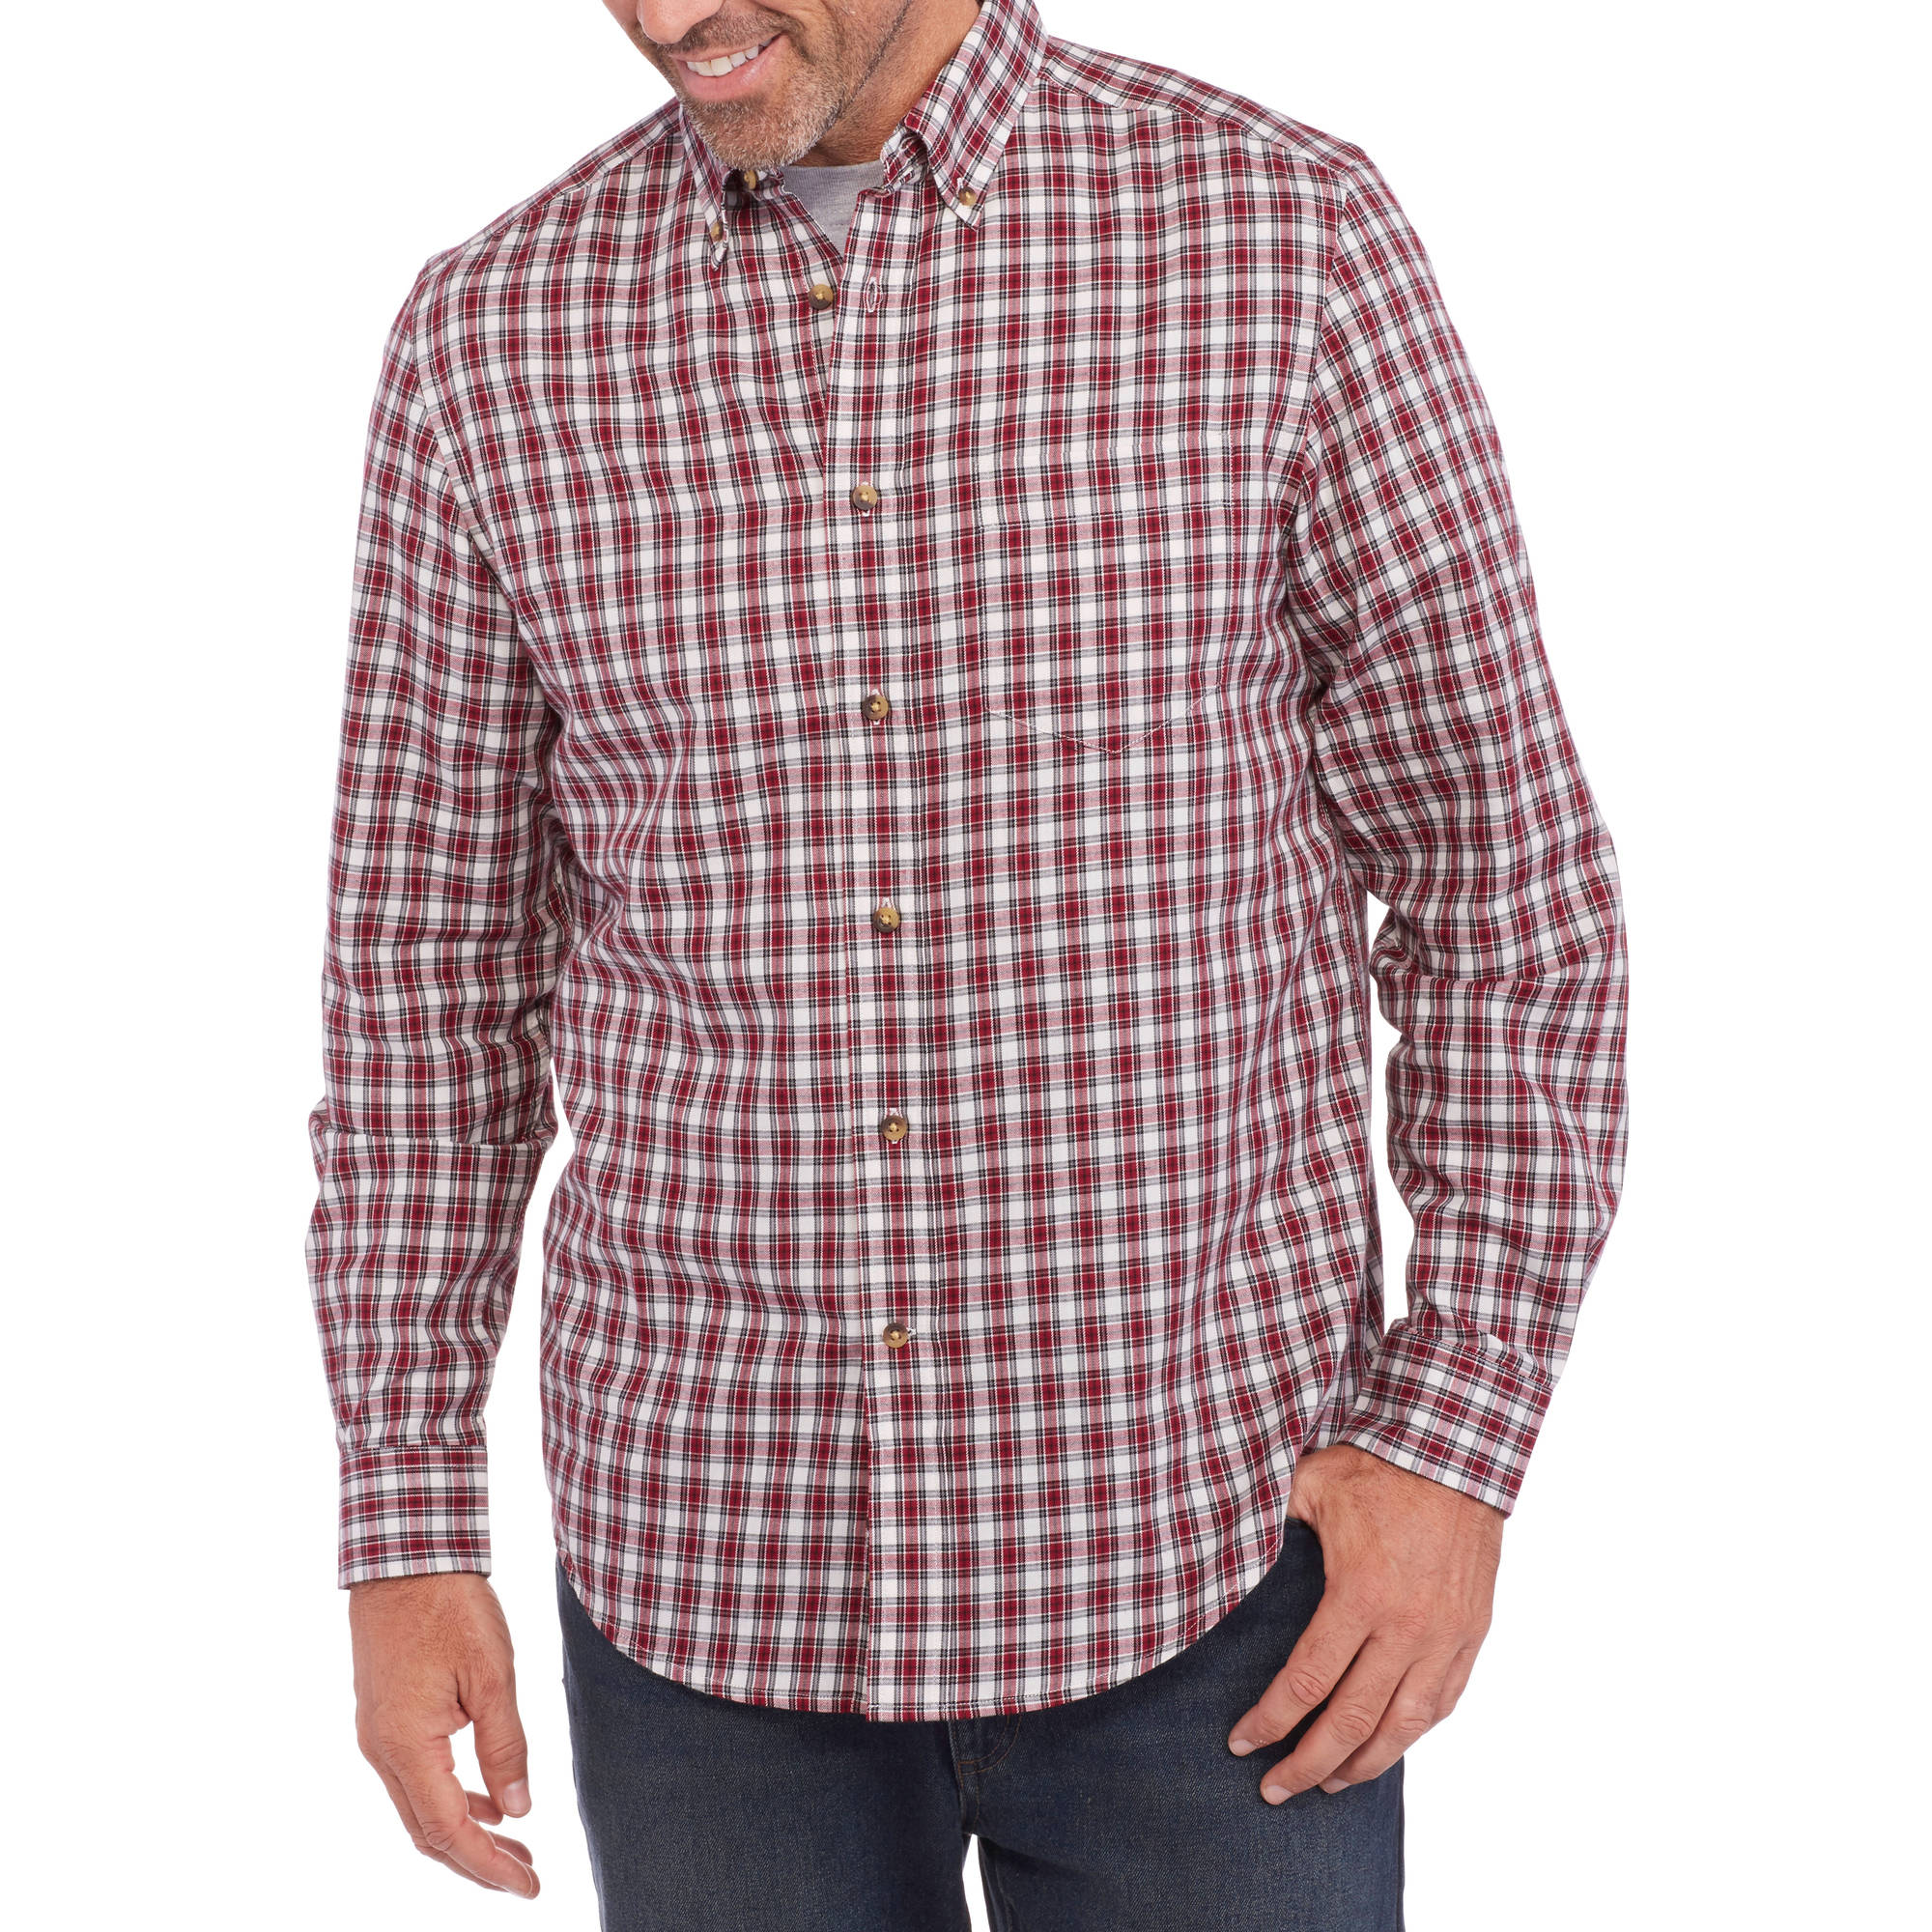 Men's Long Sleeve Twill Plaid Shirt - image 1 of 2